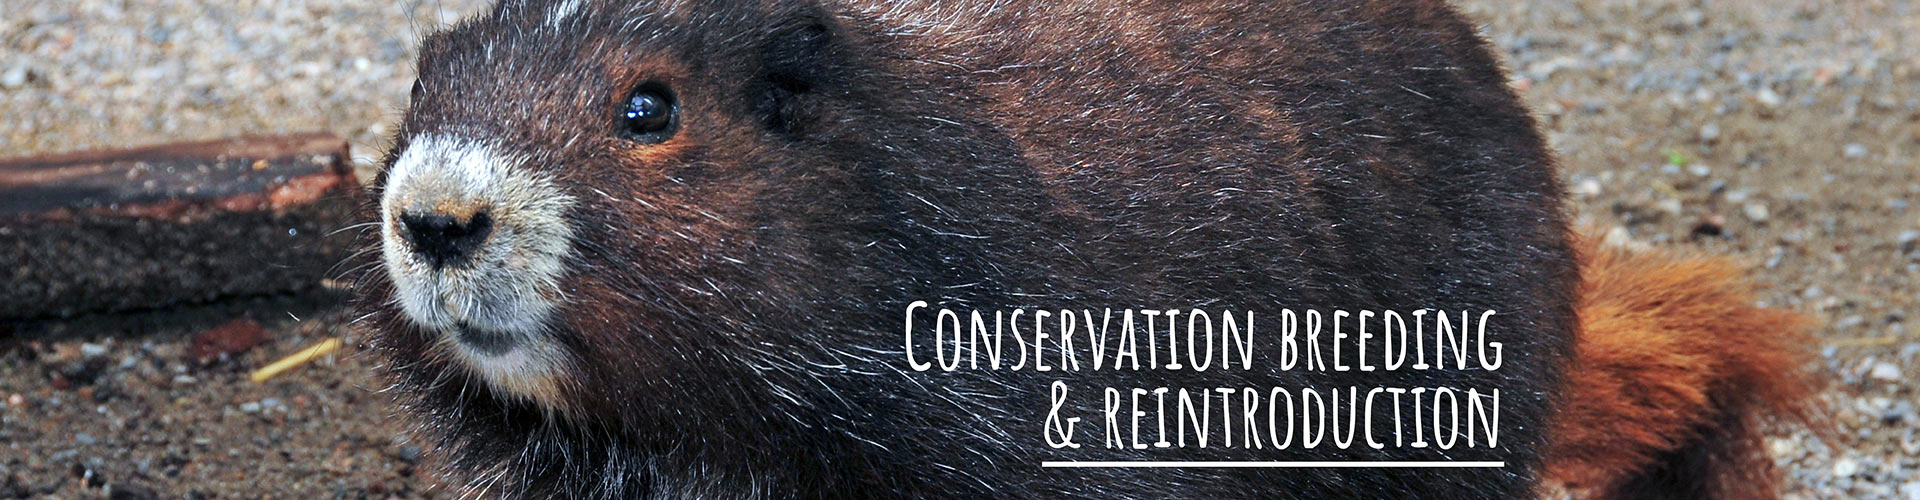 Conservation Breeding and Reintroduction - VIM